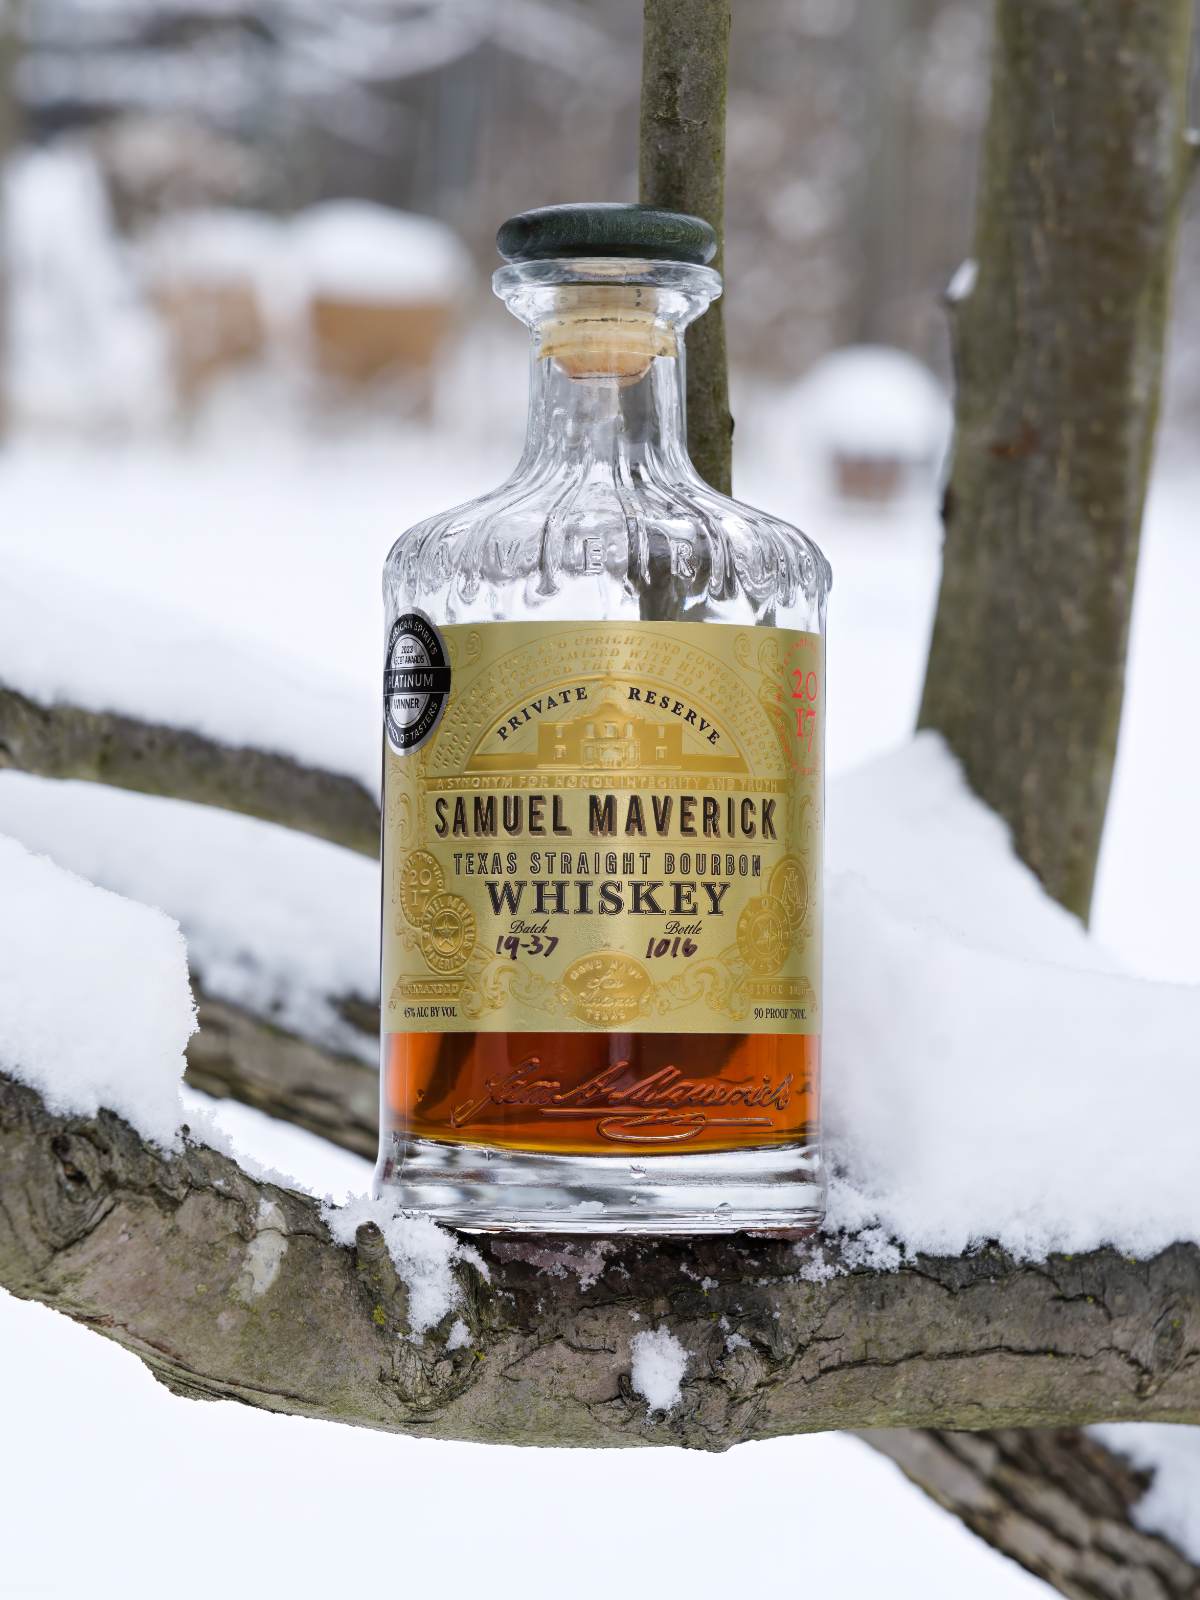 Samuel Maverick Private Reserve Bourbon featured